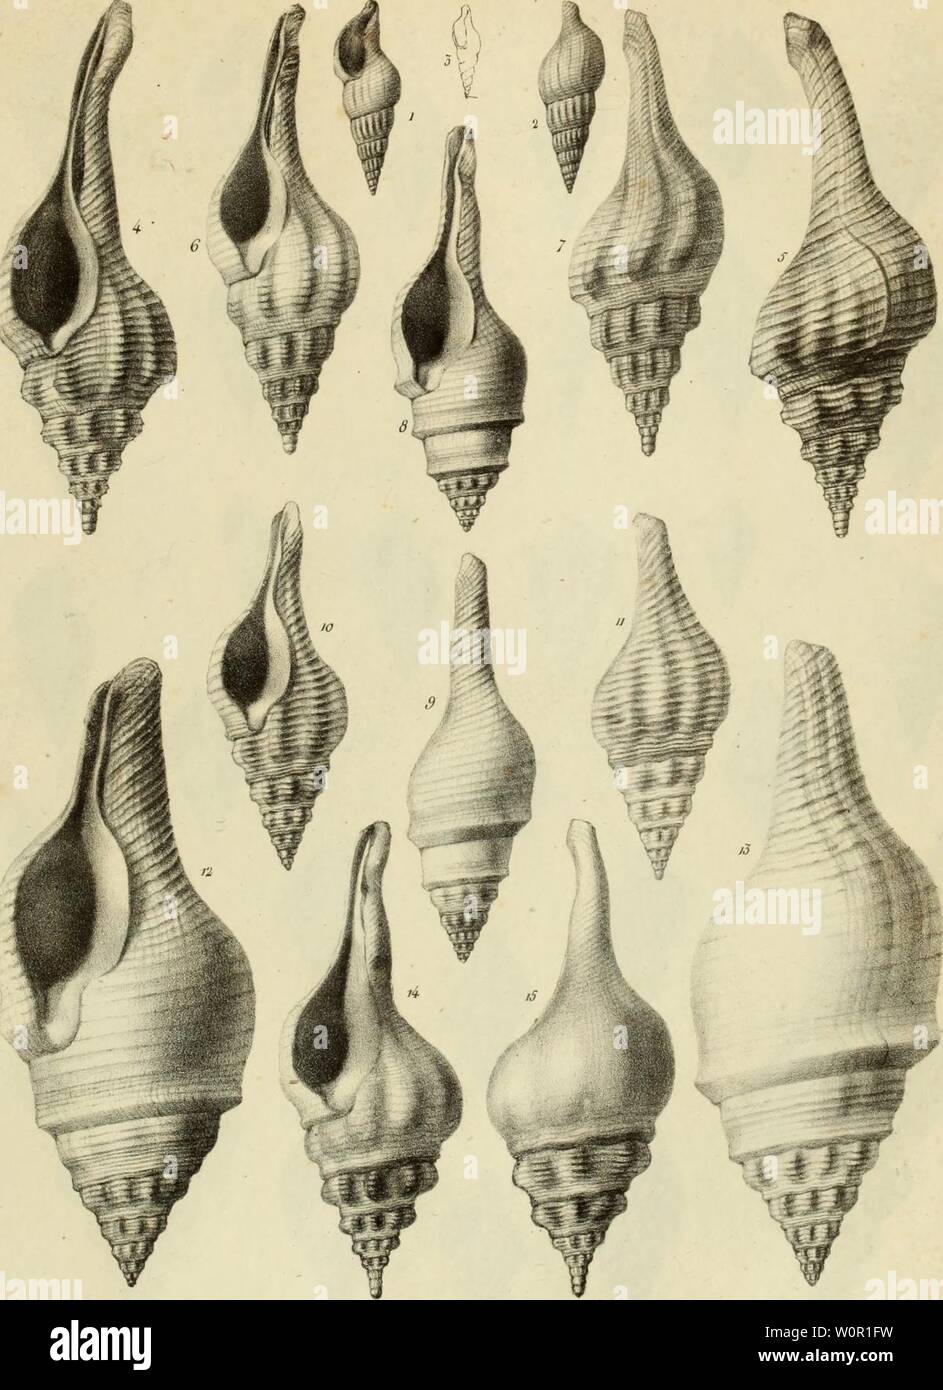 Archive image from page 200 of Description des coquilles fossiles des. Description des coquilles fossiles des environs de Paris descriptiondesco002desh Year: 1824  :j â j    P.Oudart ,/,/ /SA rtr/////fj /rVJi/ÃJ &lt;Zt&lt;j 'J ÃWVWWlJ as ( v/, 04&f. -Li//l i/f J,rms;Mr Stock Photo